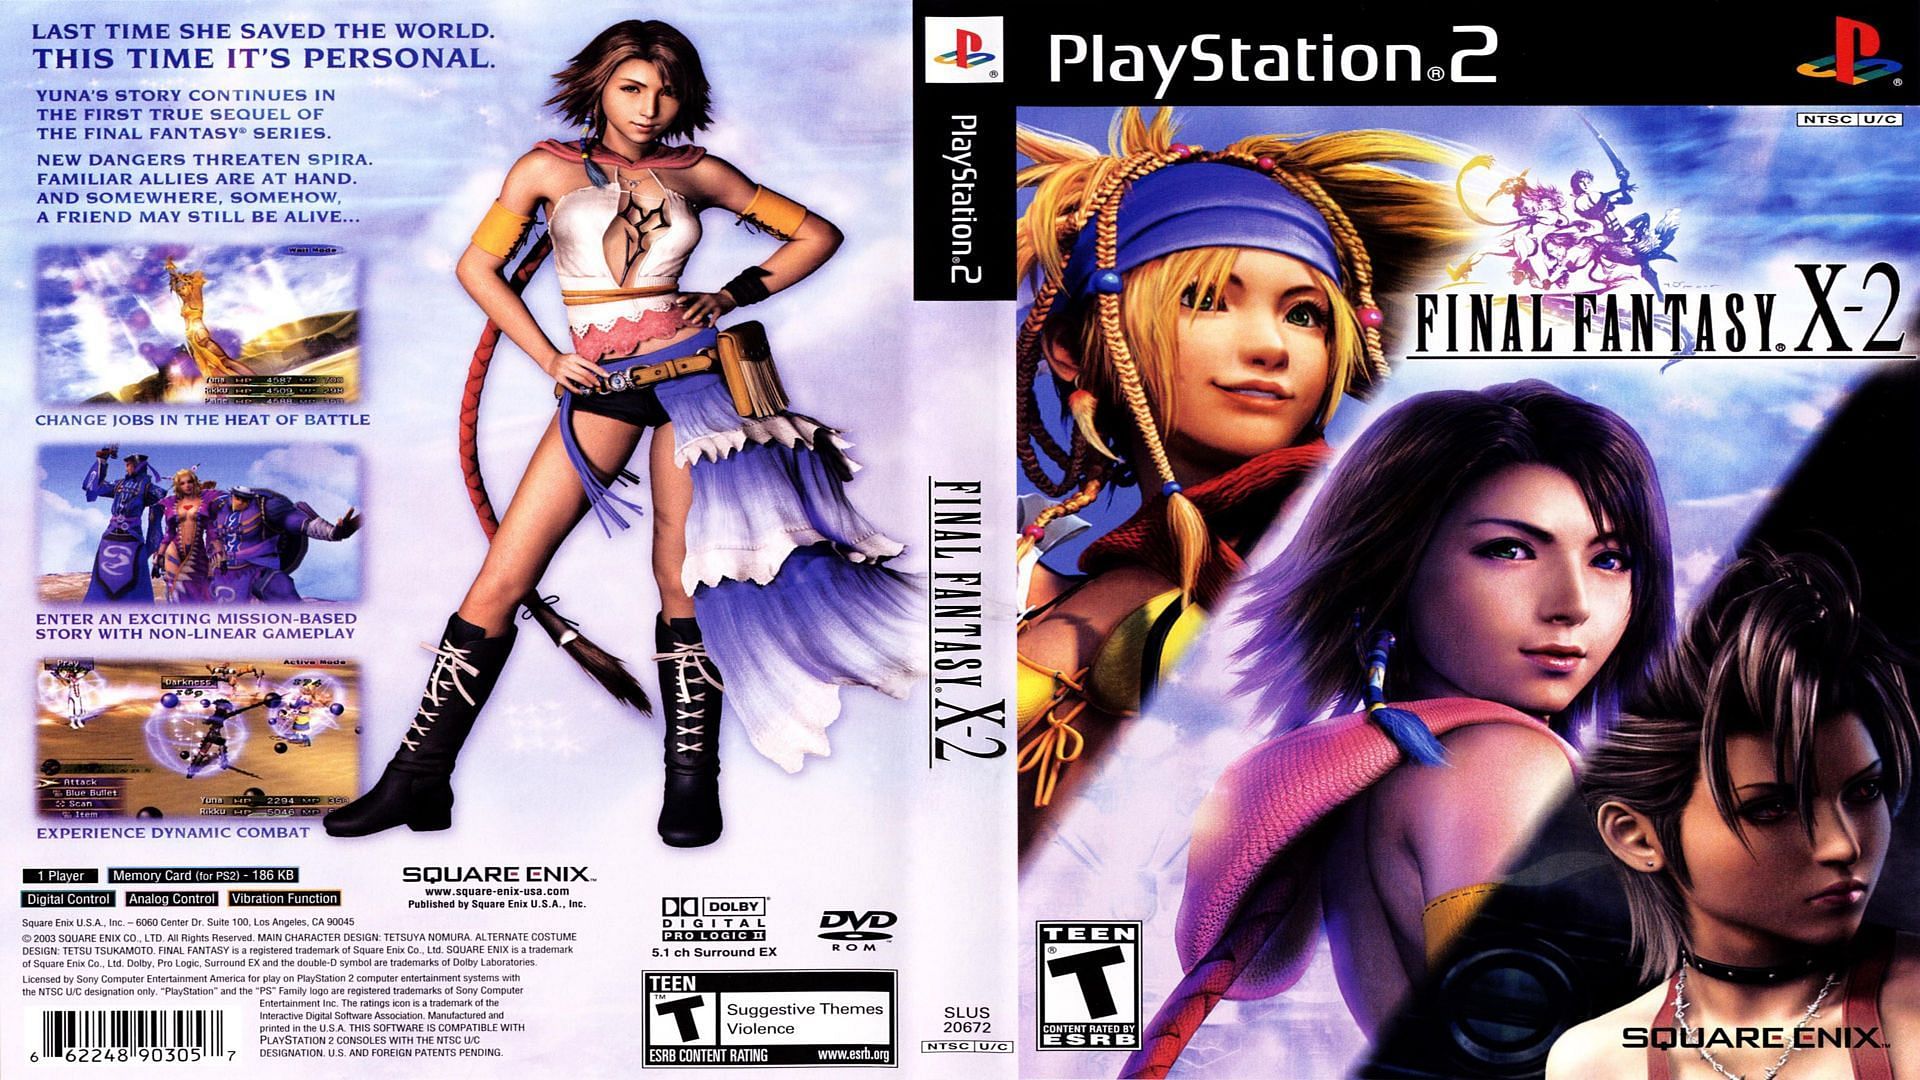 Final Fantasy X-2 was a direct sequel to Final Fantasy X (Image via Square Enix)